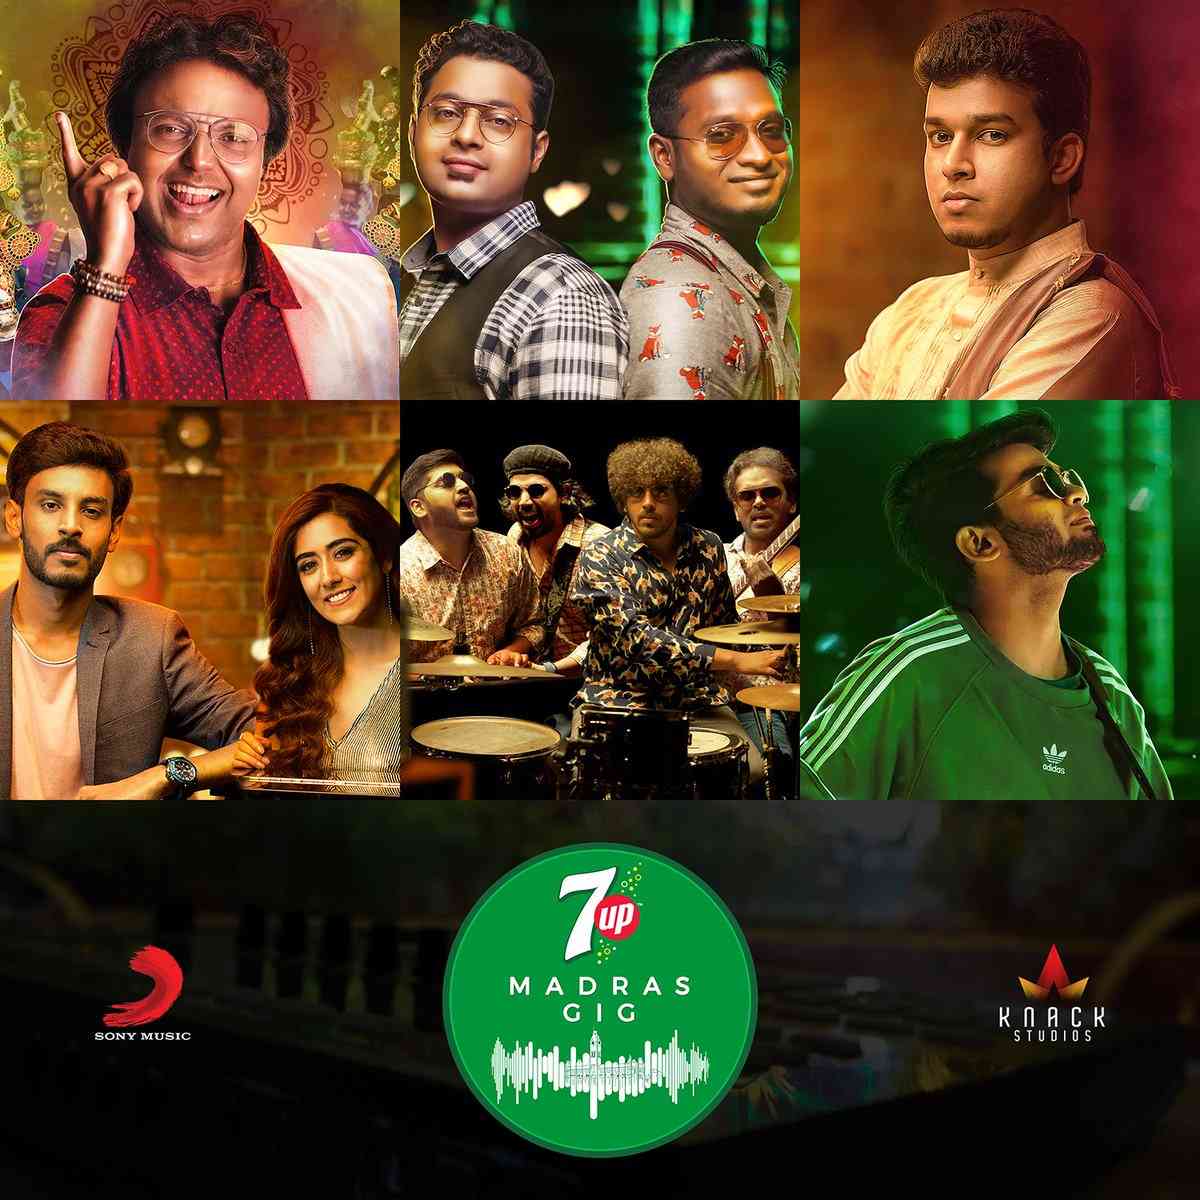 AR Rahman Son AR Ameen Debuts through 7up Madras Gig Sago Full Video Song